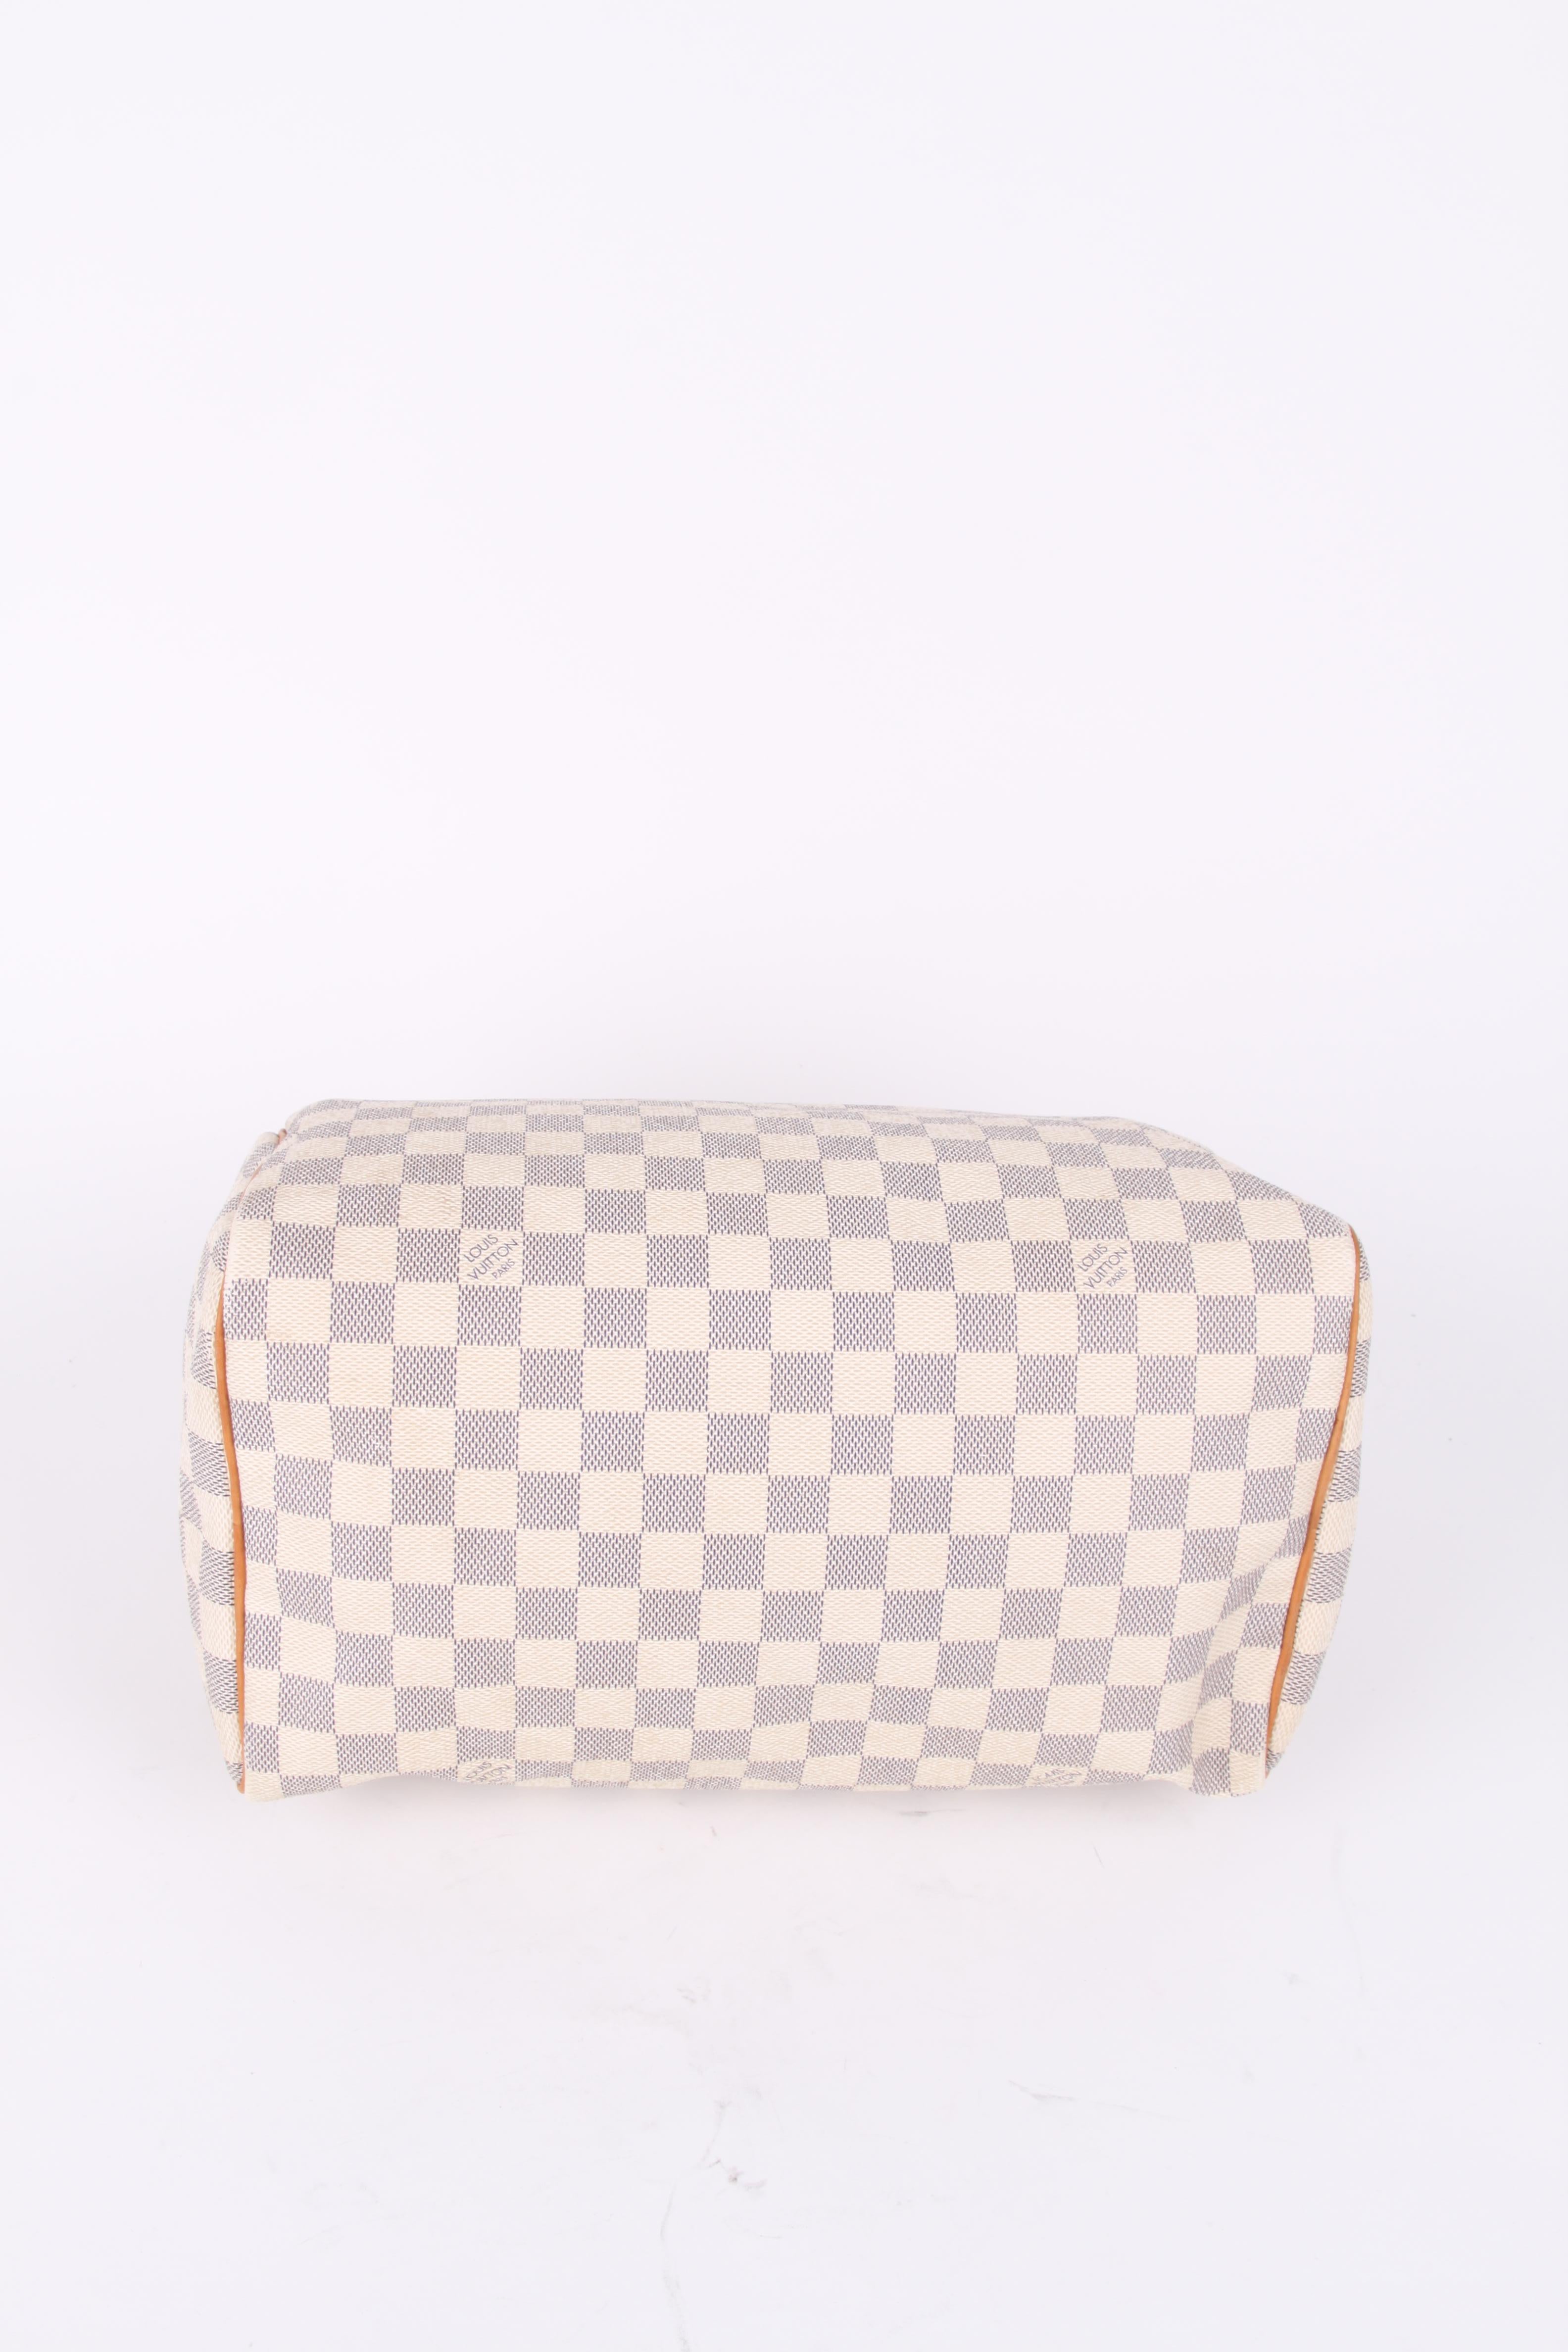 Louis Vuitton Speedy 30 Damier Azur Canvas Bag 1